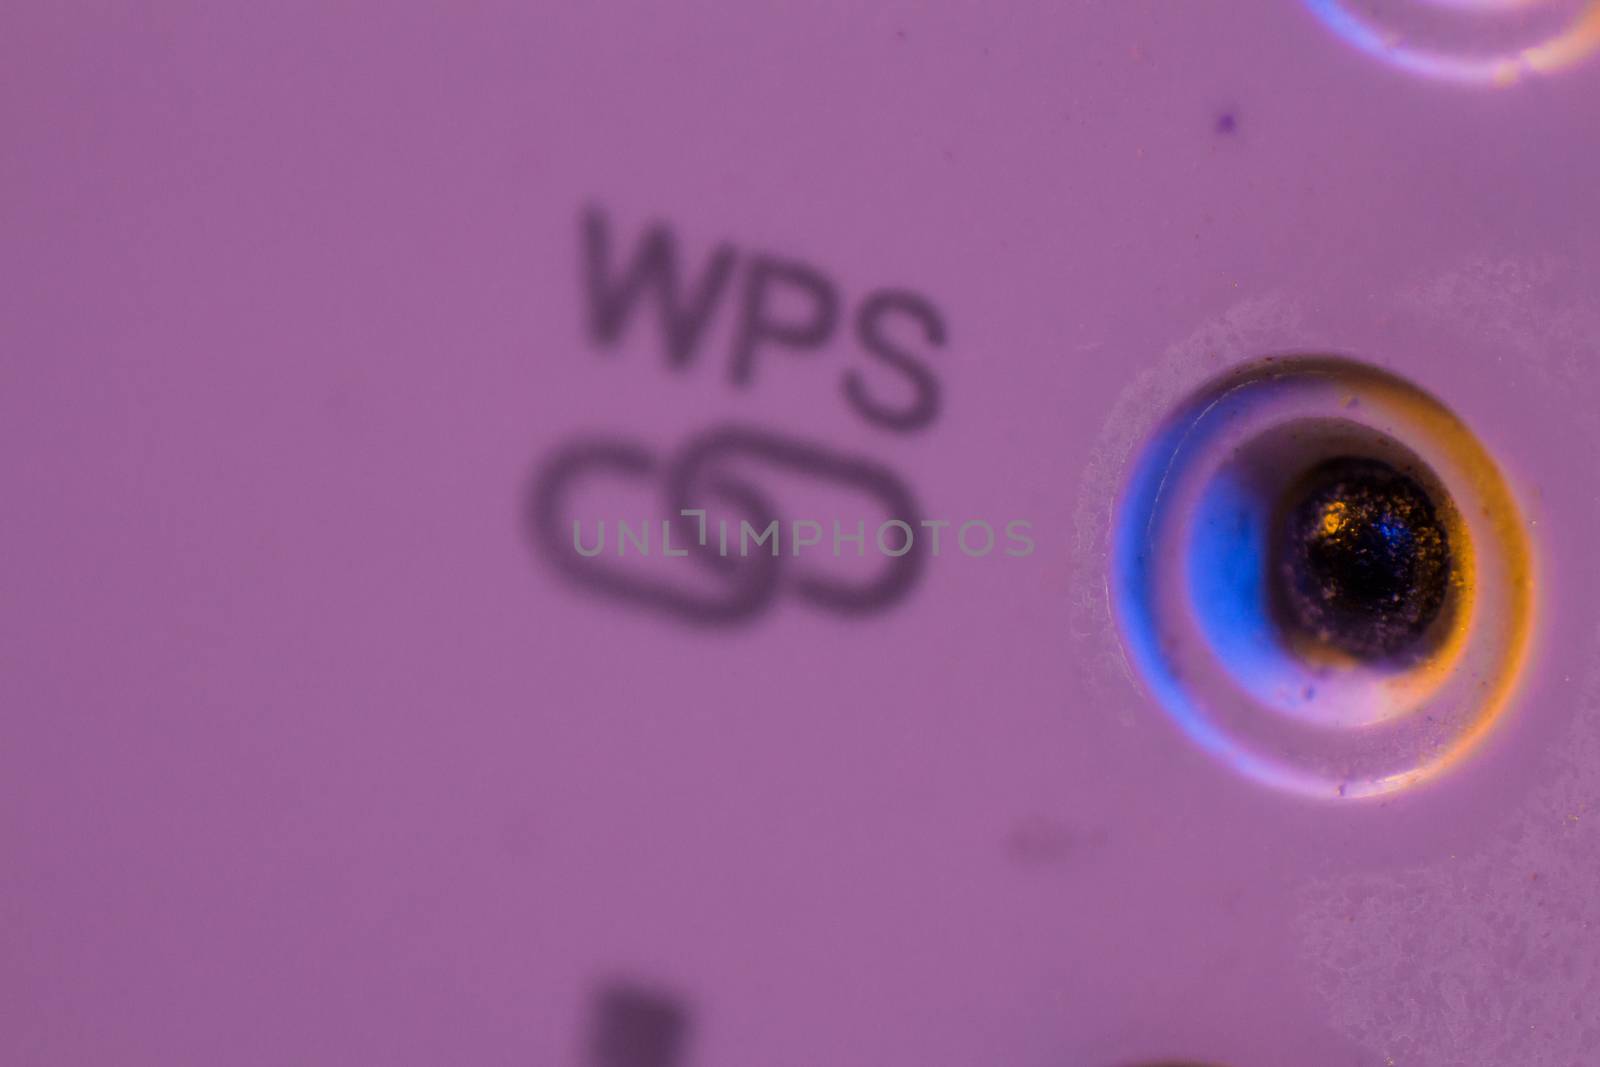 Macro closeup on WPS symbol signal connection status led light by wavemovies